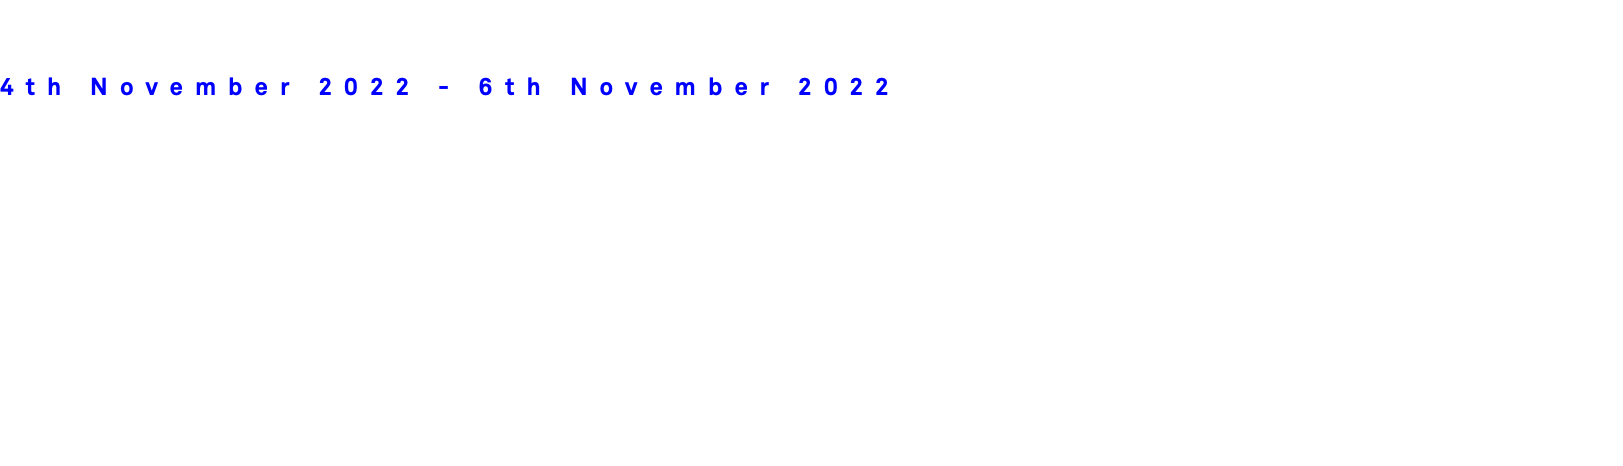 FILET 4th November 2022 - 6th November 2022 CHARLI PAYNE ONE BIG CHOP 